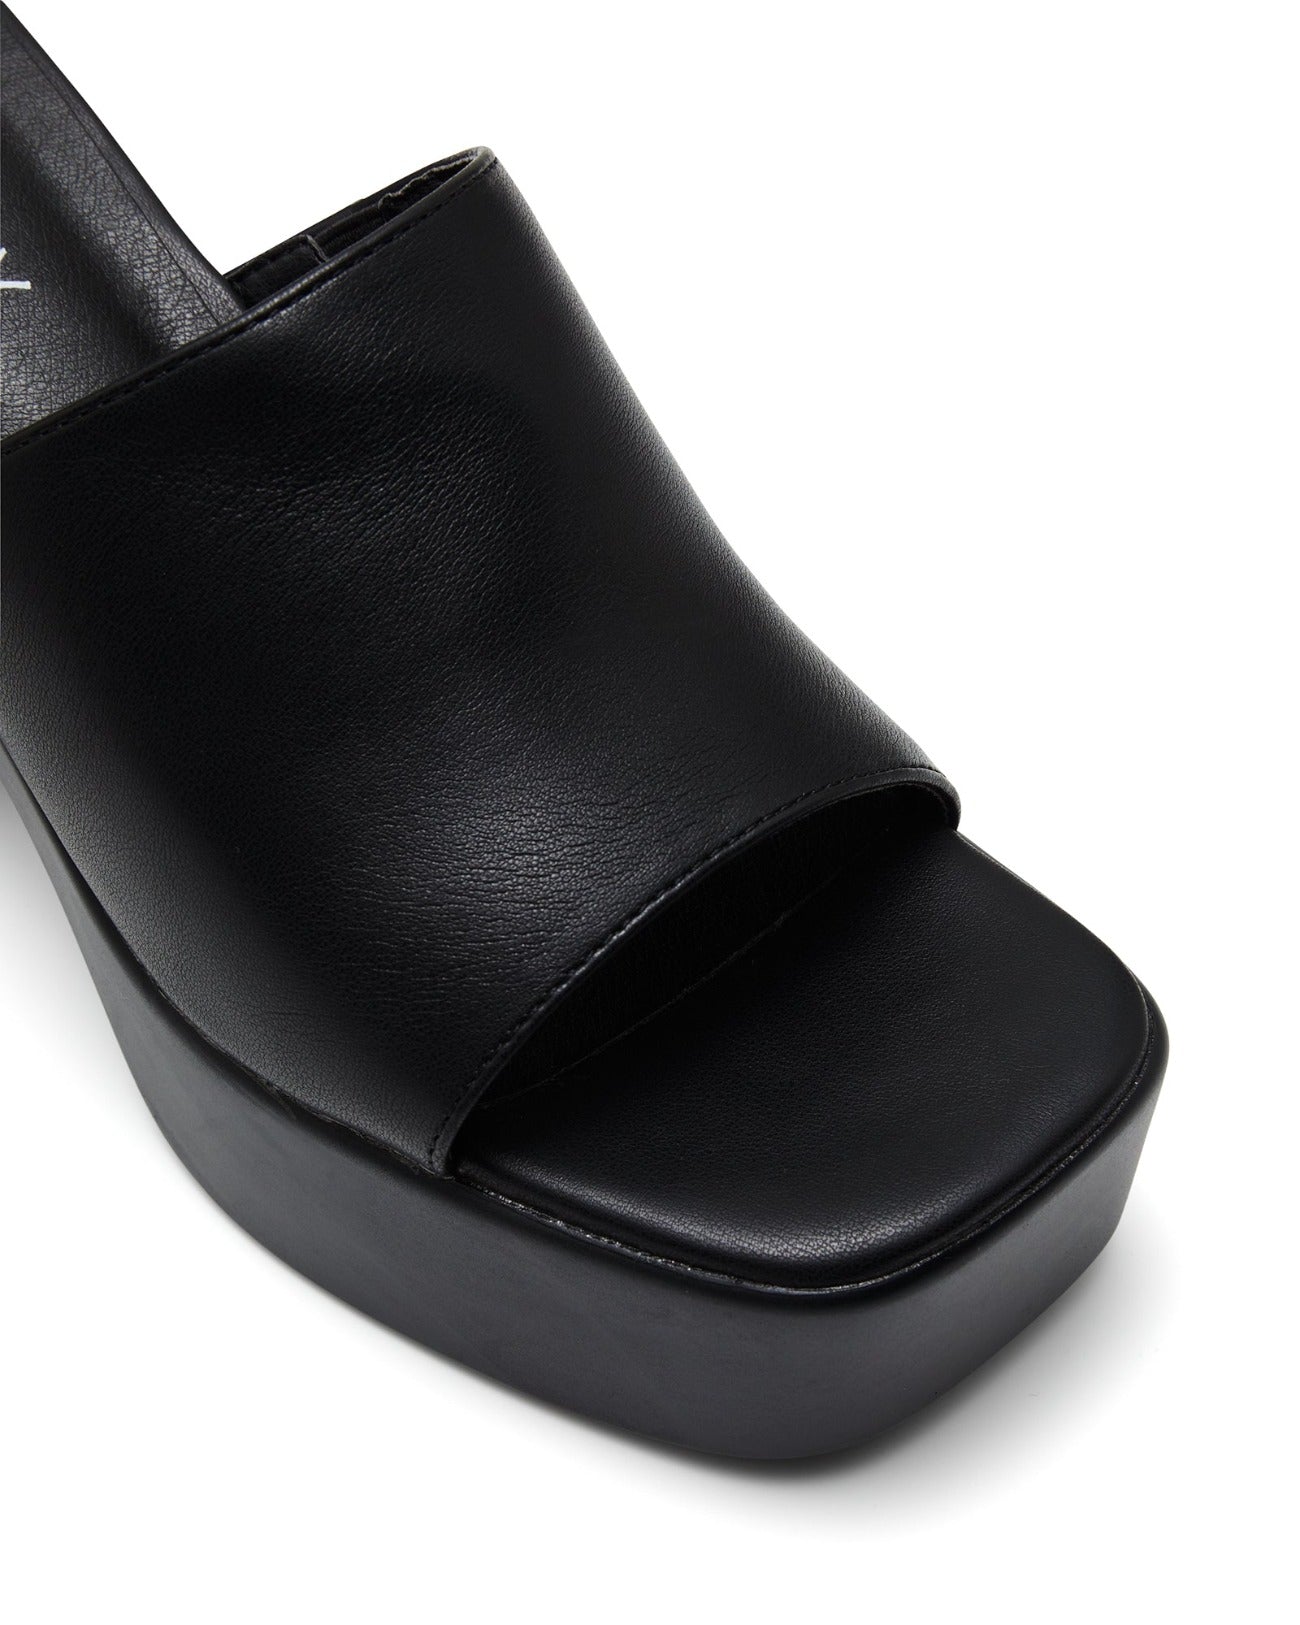 Therapy Shoes Devon Black | Women's Heels | Sandals | Platform | Mule